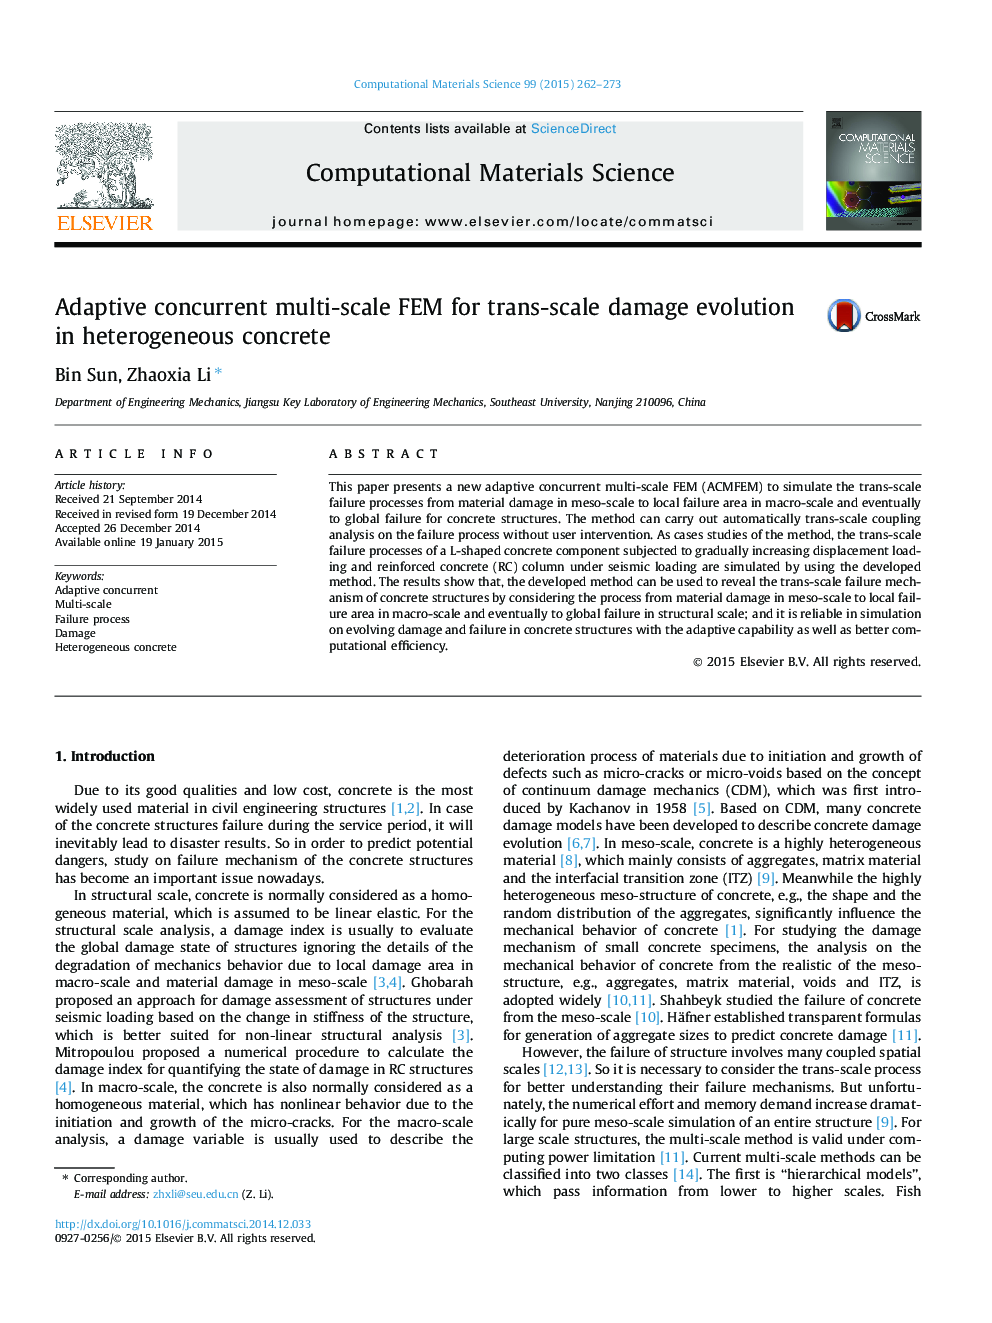 Adaptive concurrent multi-scale FEM for trans-scale damage evolution in heterogeneous concrete